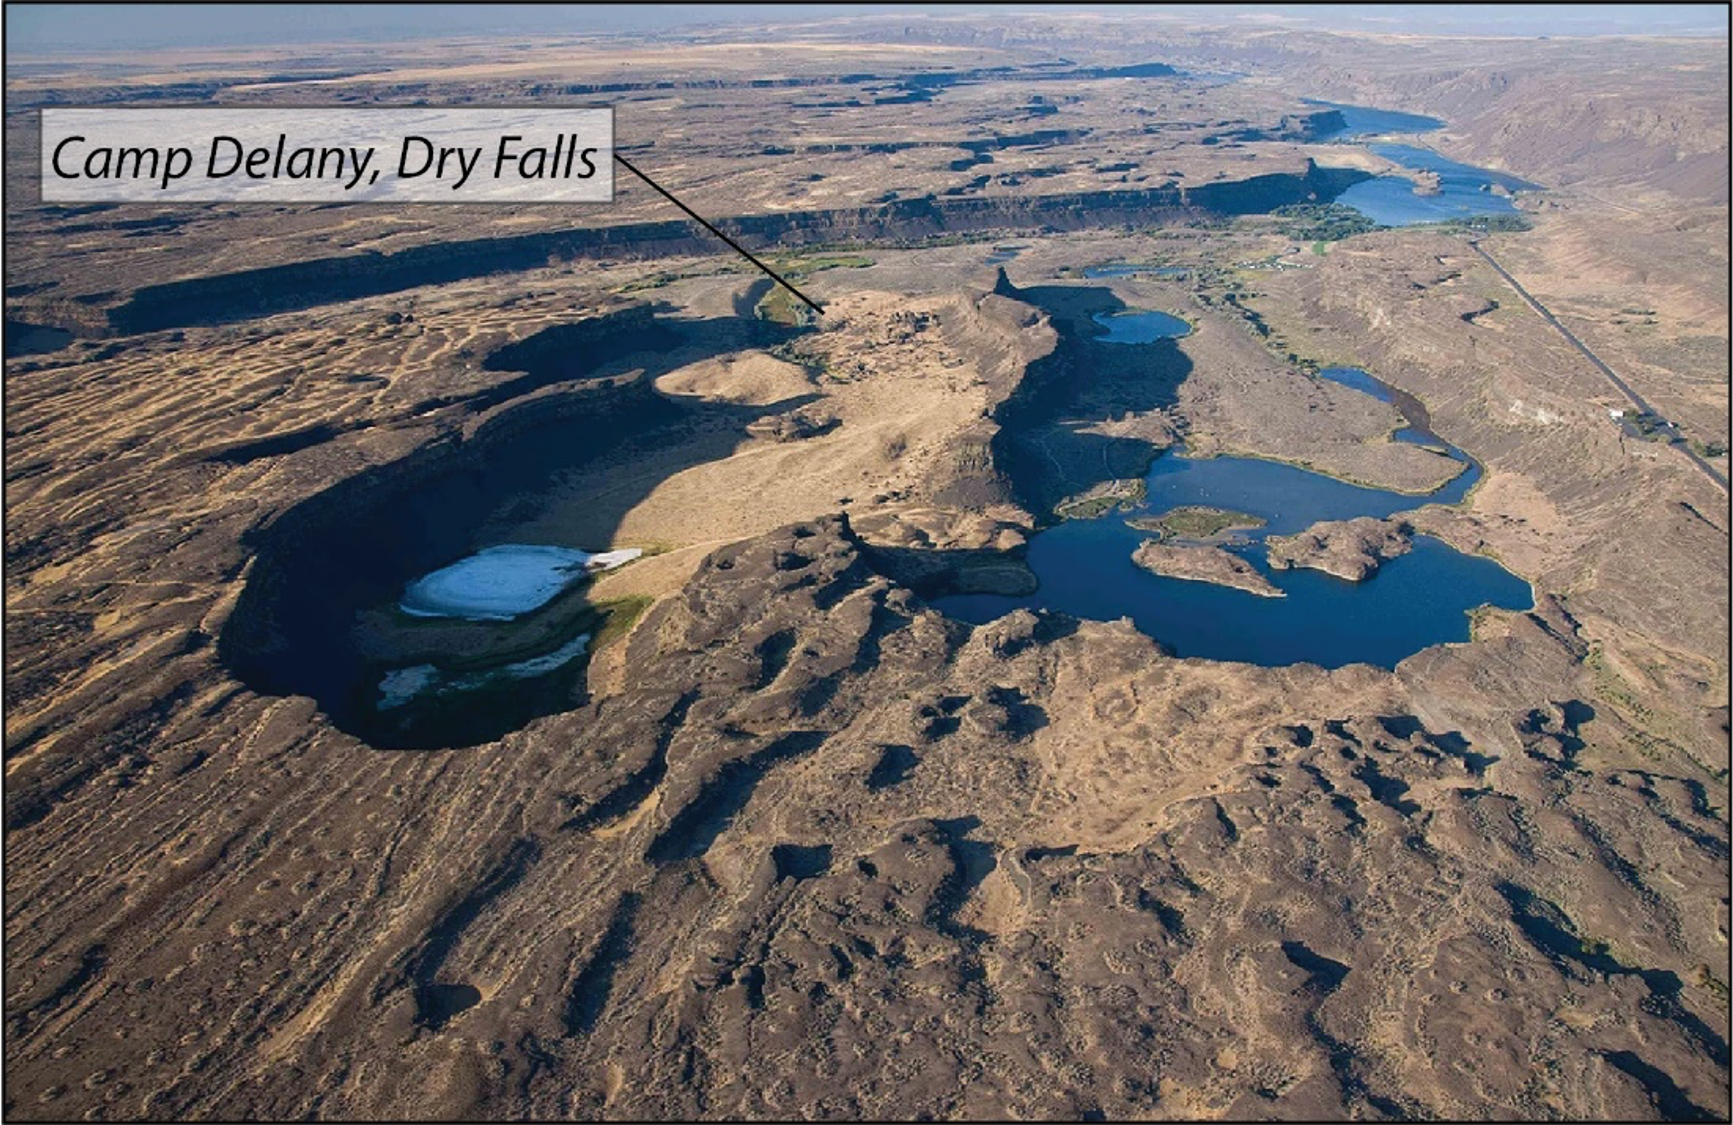 Outburst Floods Penrose Dry Falls Camp Delany